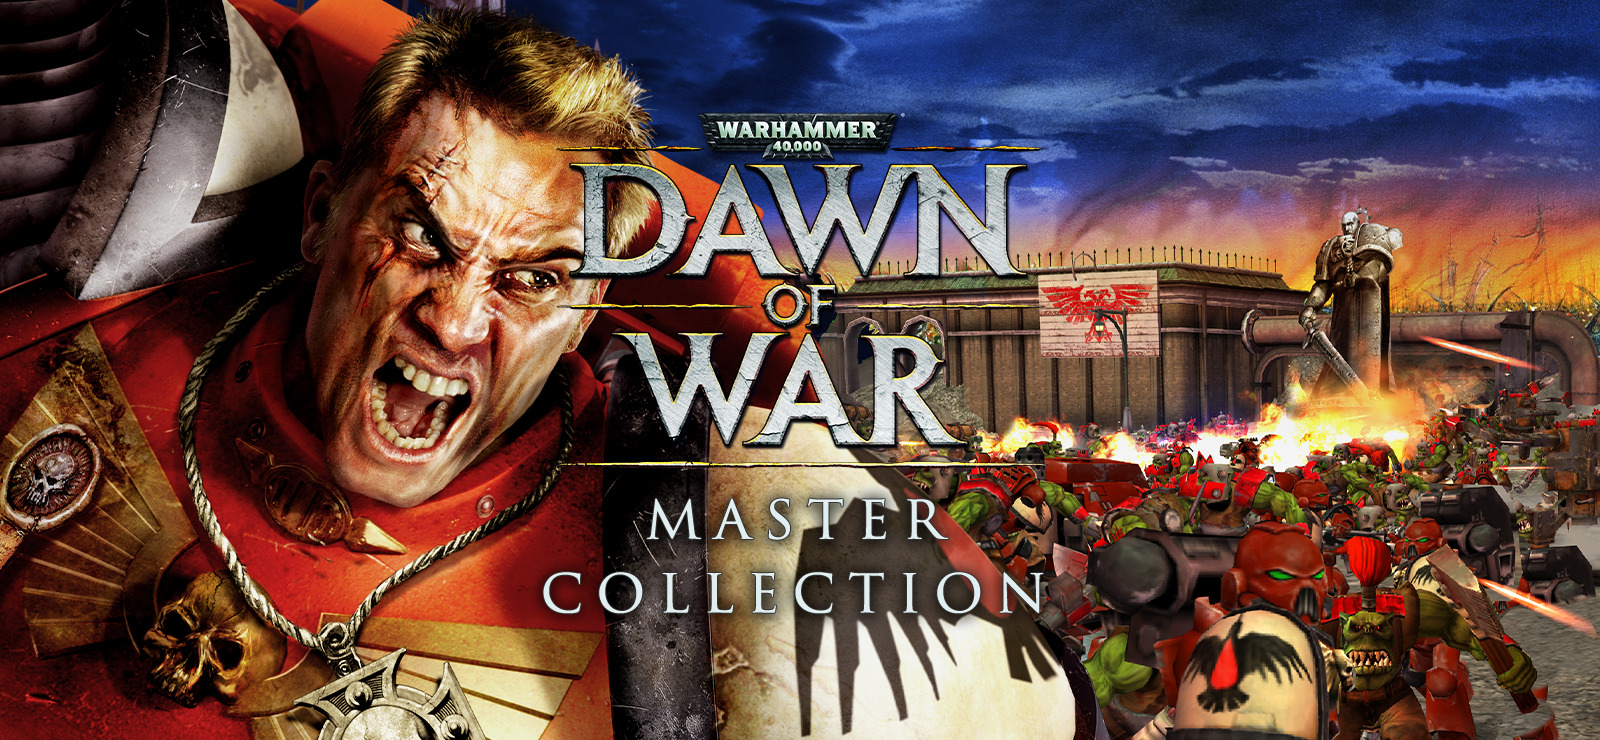 Warhammer 40,000: Dawn Of War - Master Collection Free Download.